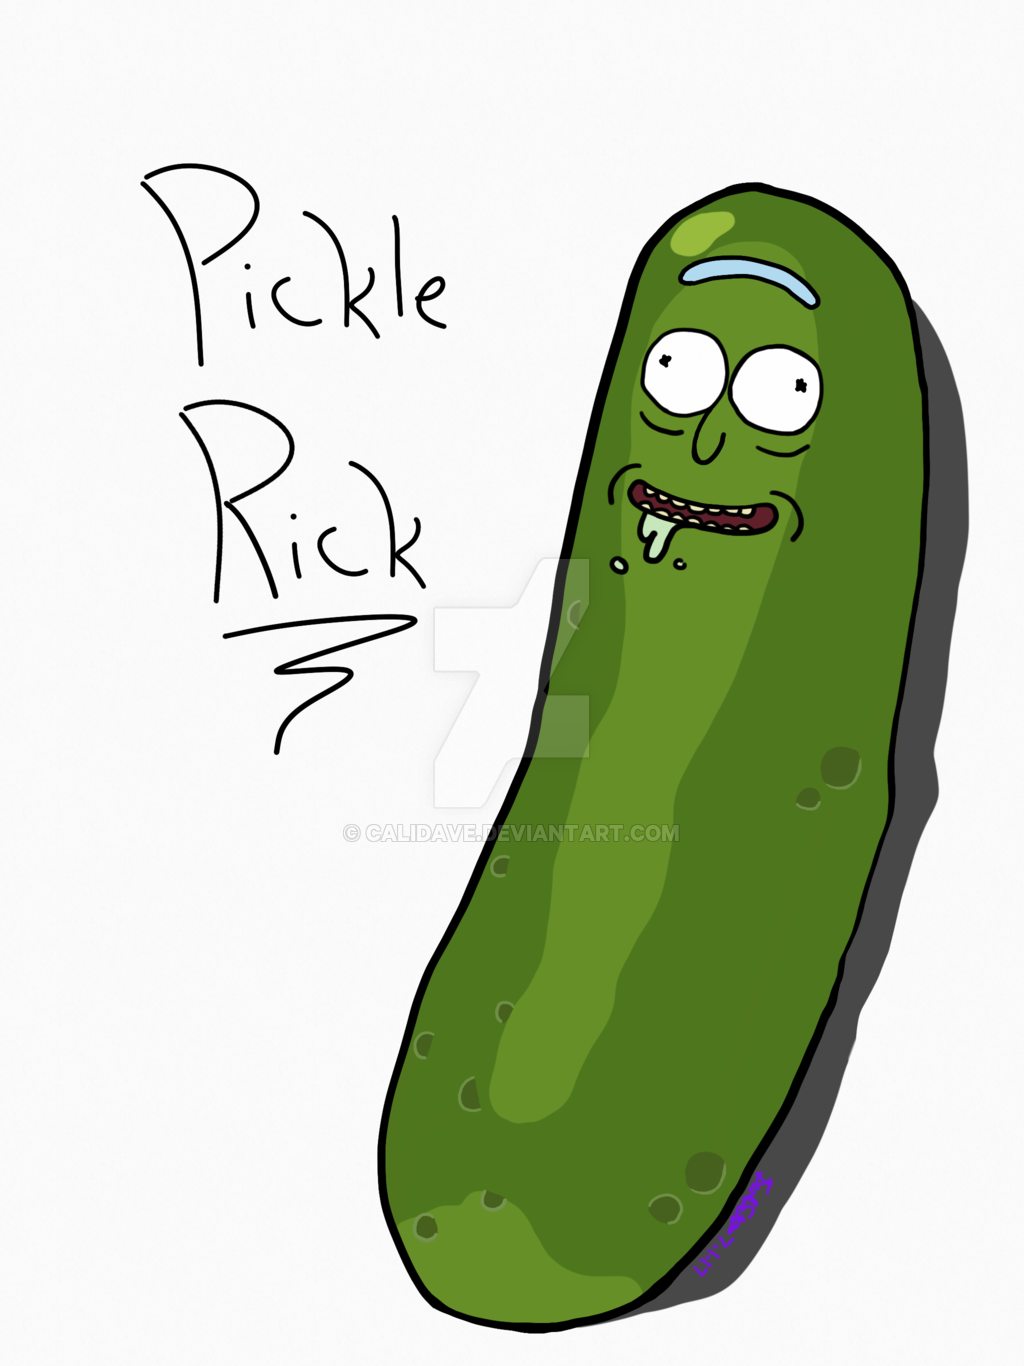 S3e3 pickle riiick.png